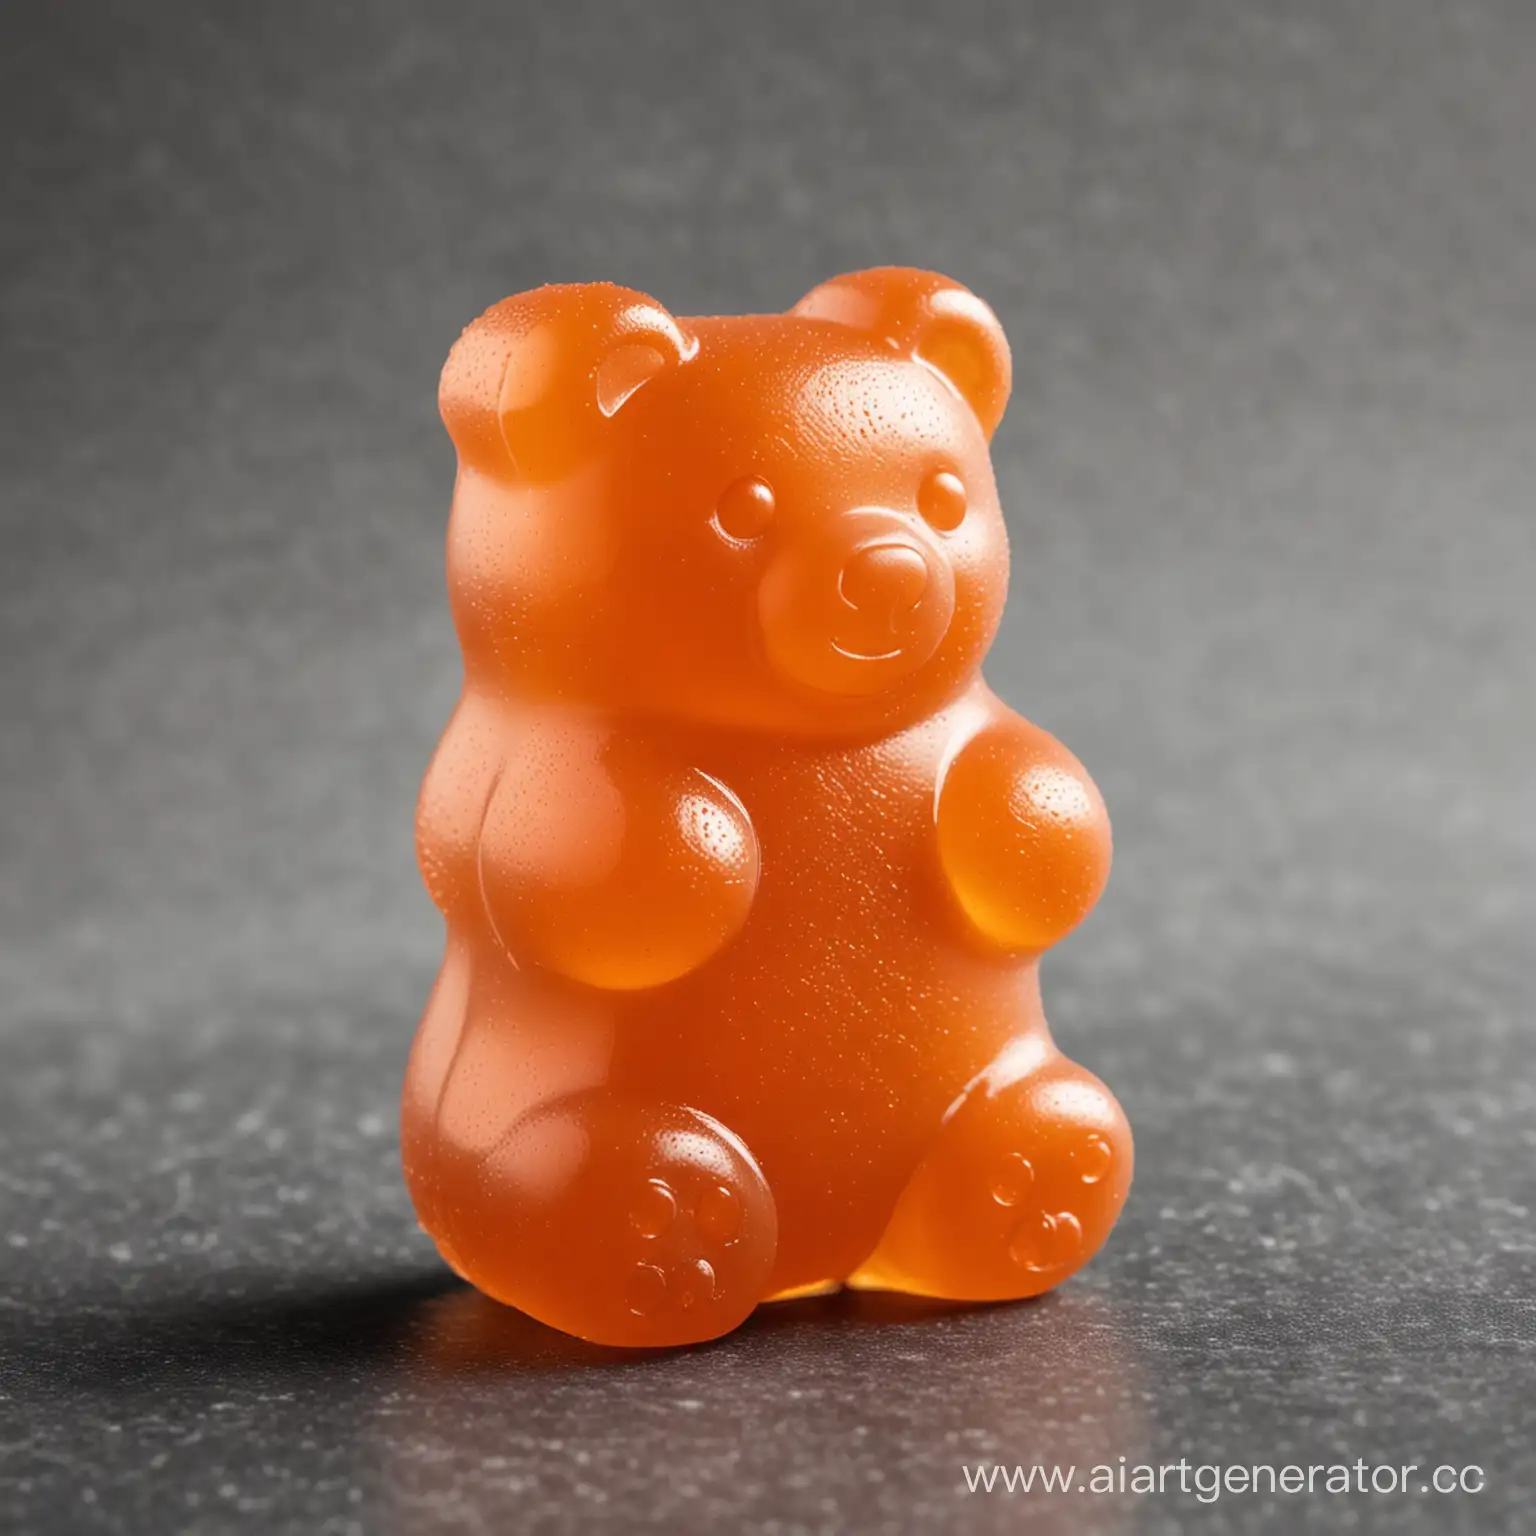 an orange gummy bear side view